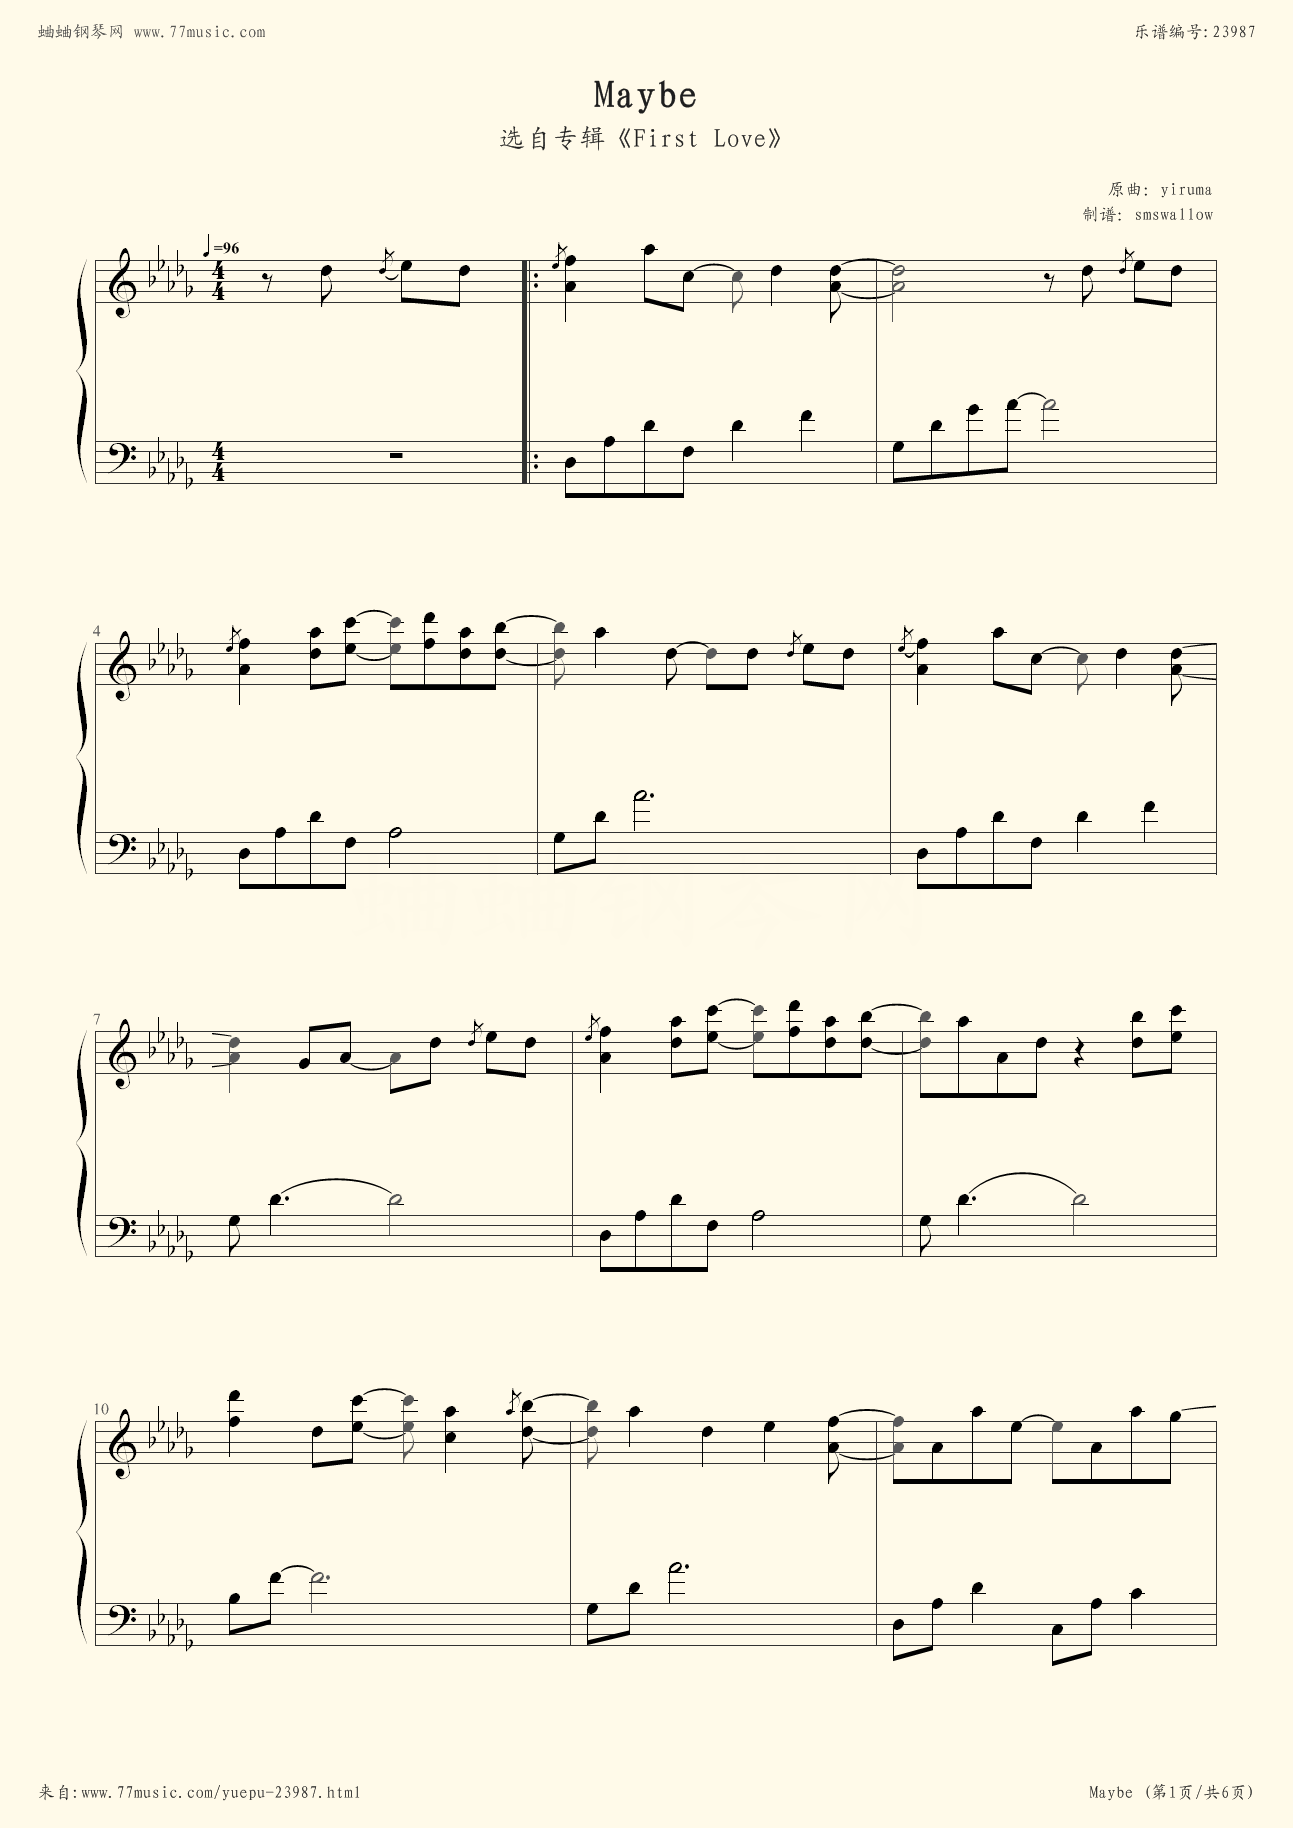 Maybe - Yiruma - Flash Free Piano Sheet Music | Learn How To Play Piano